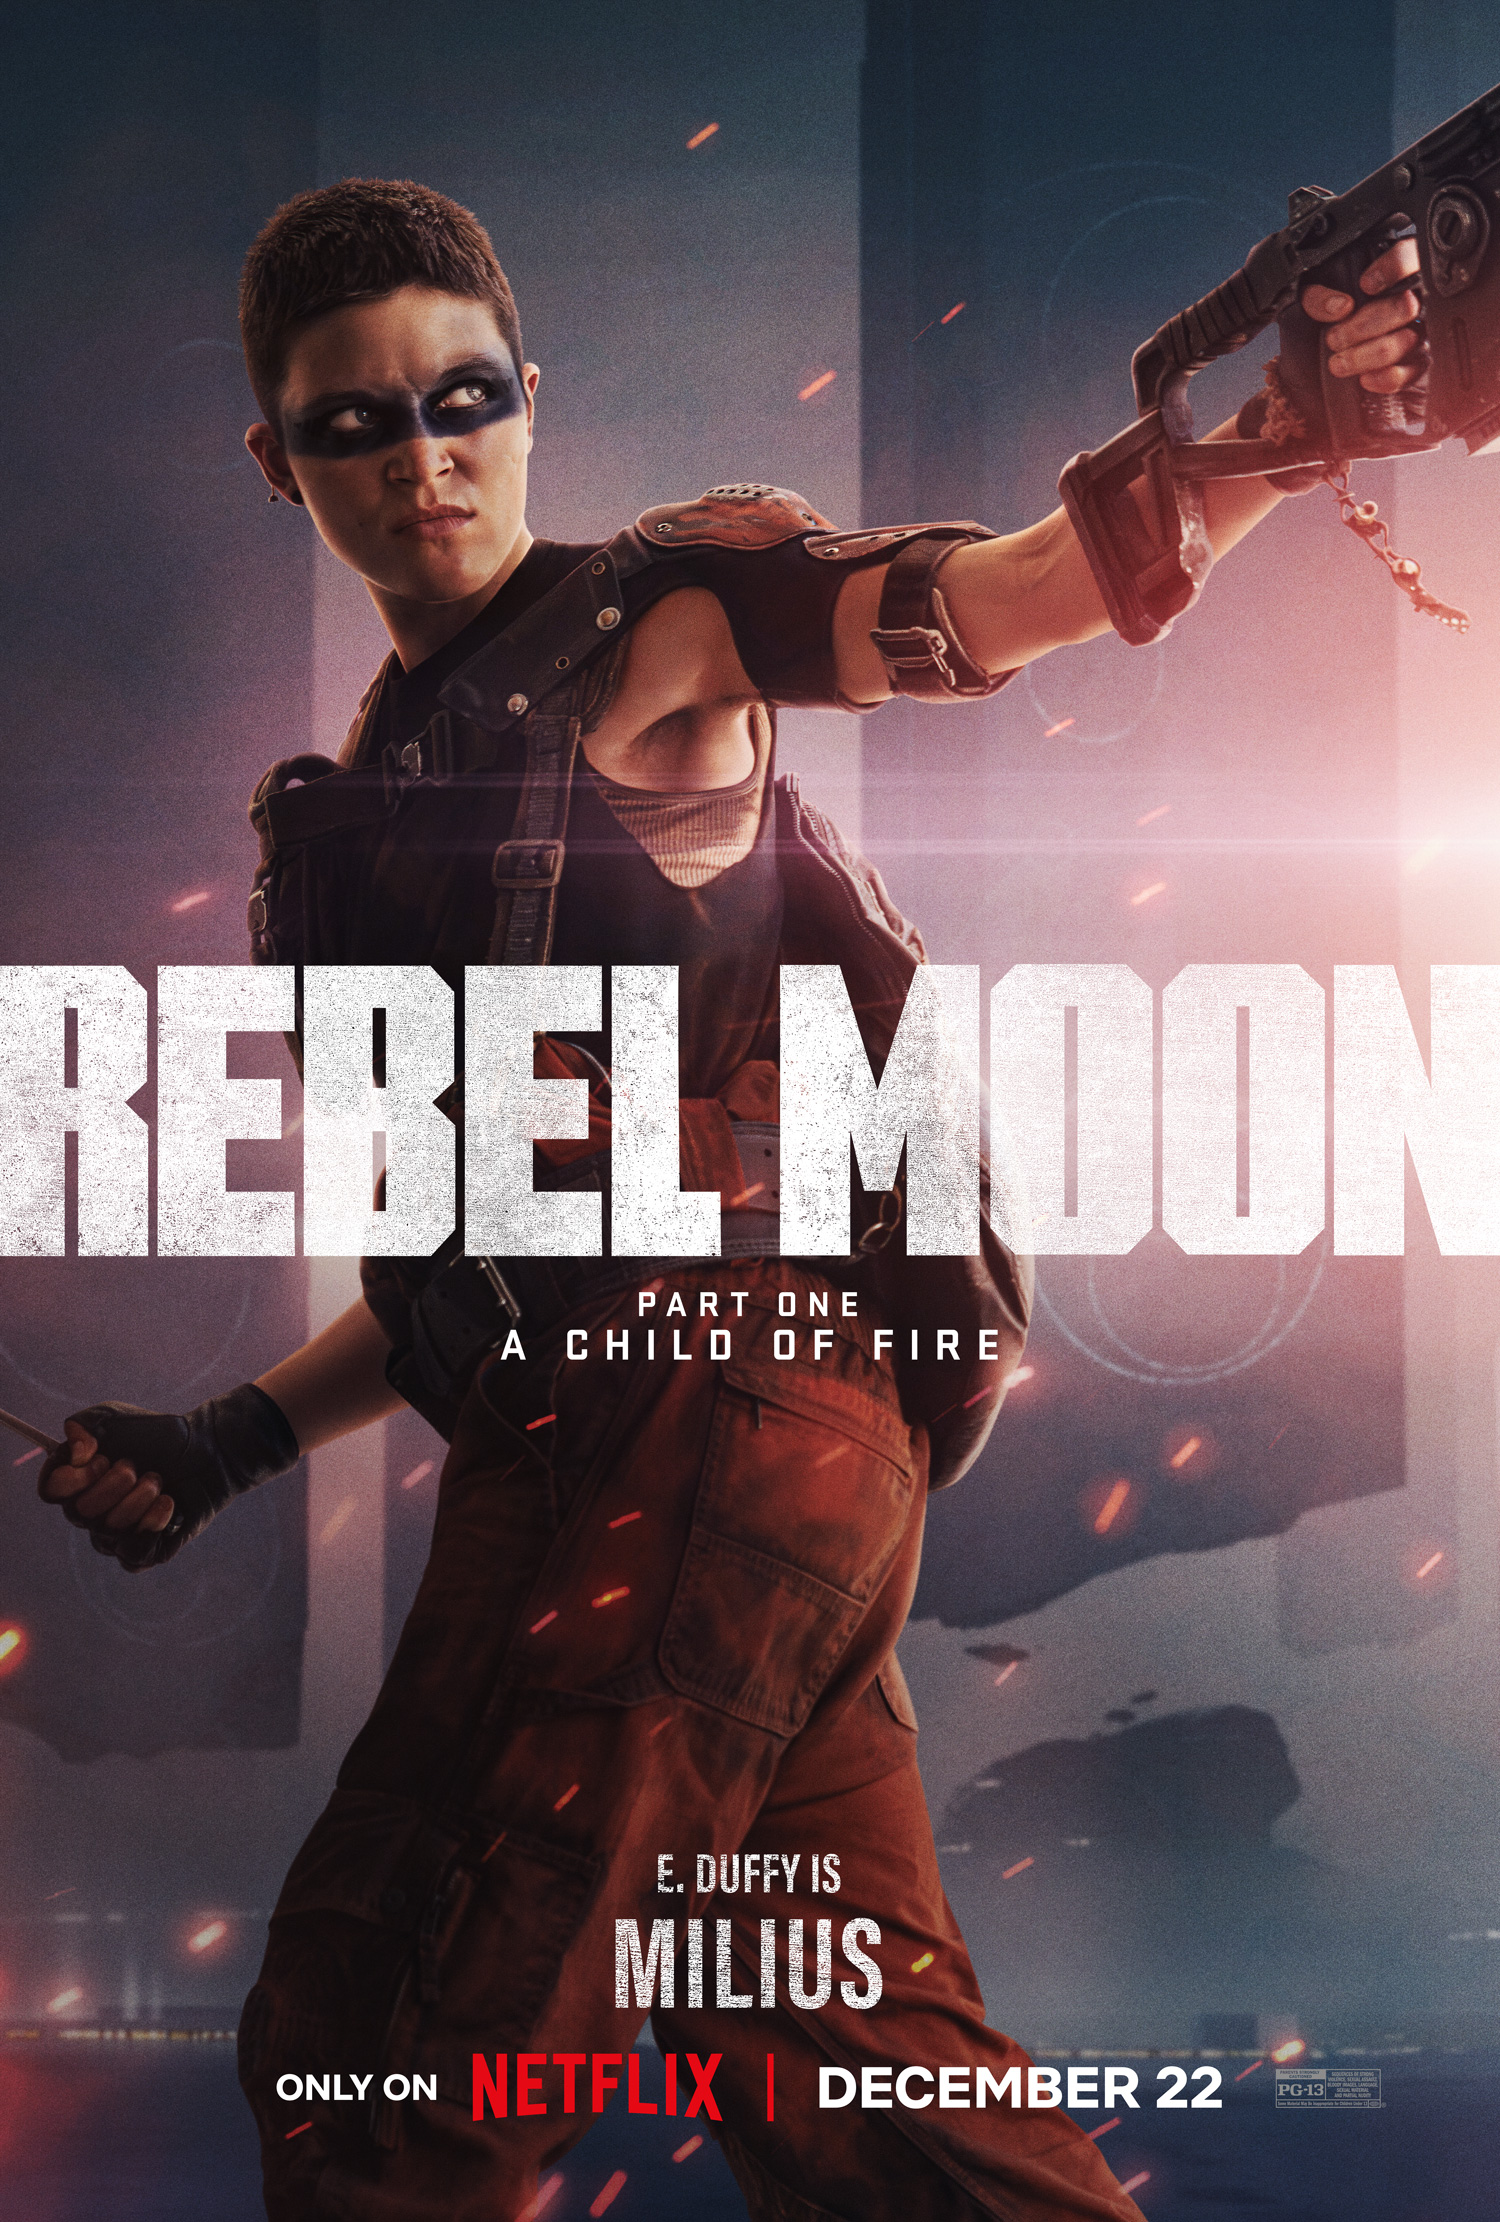 Rebel Moon  Zack Snyder revela elenco e imagens do Star Wars da Netflix  - Canaltech